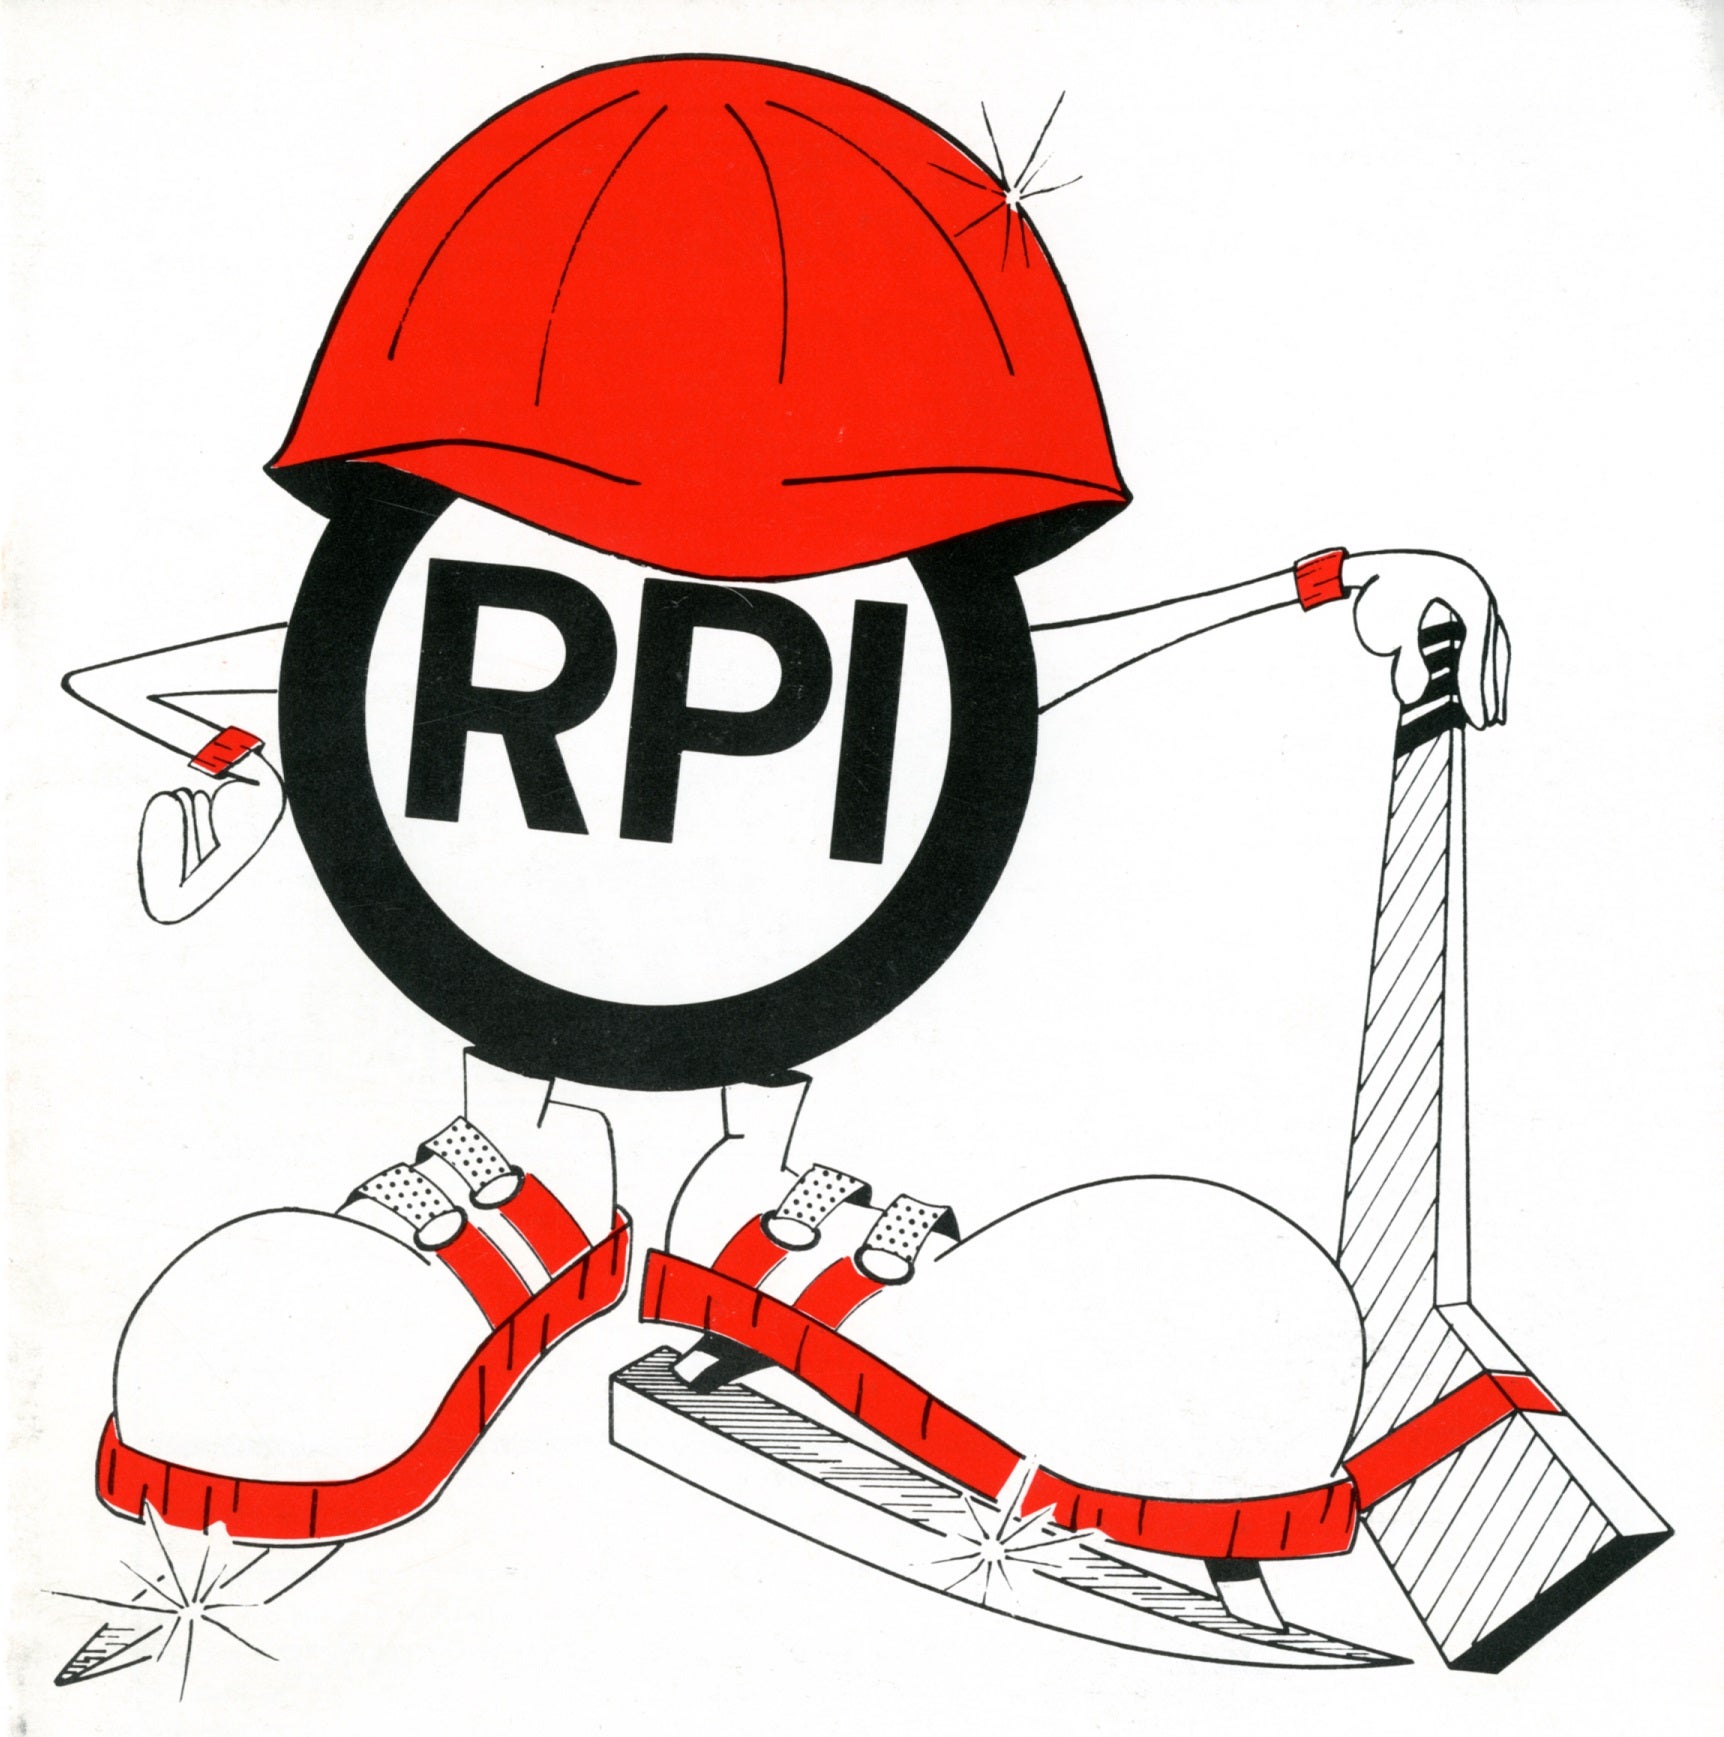 RPI Puckman used for the 1976 Hockey Program